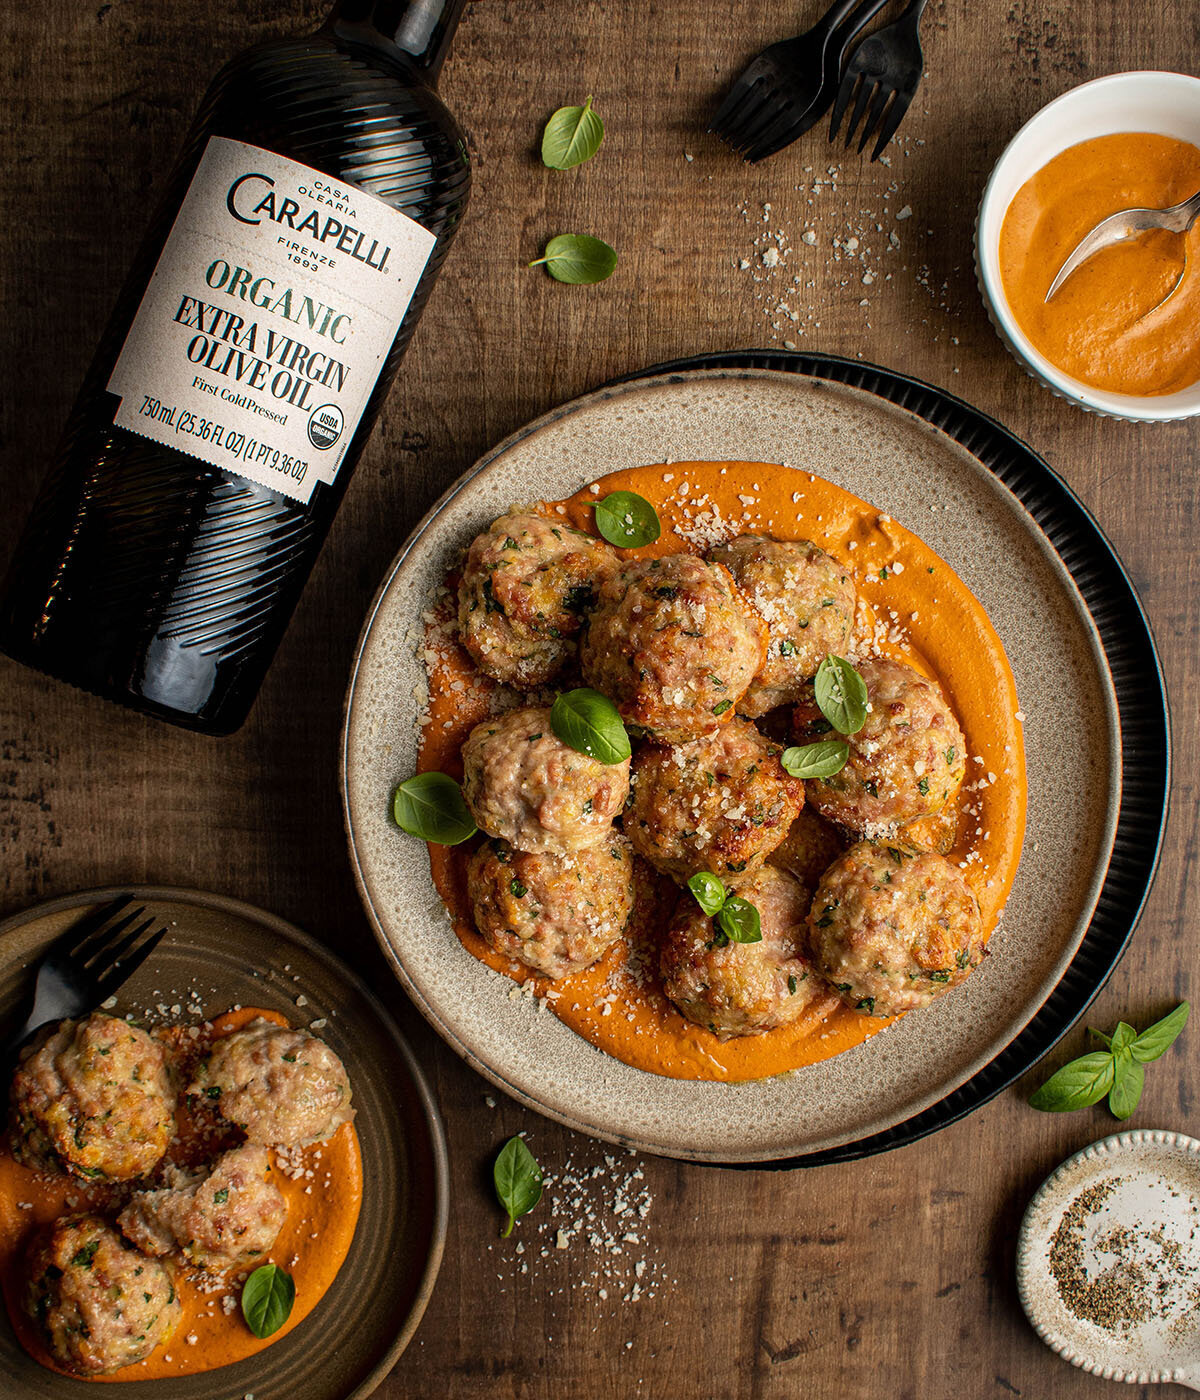 carapelli partnership featuring meatballs with romesco sauce